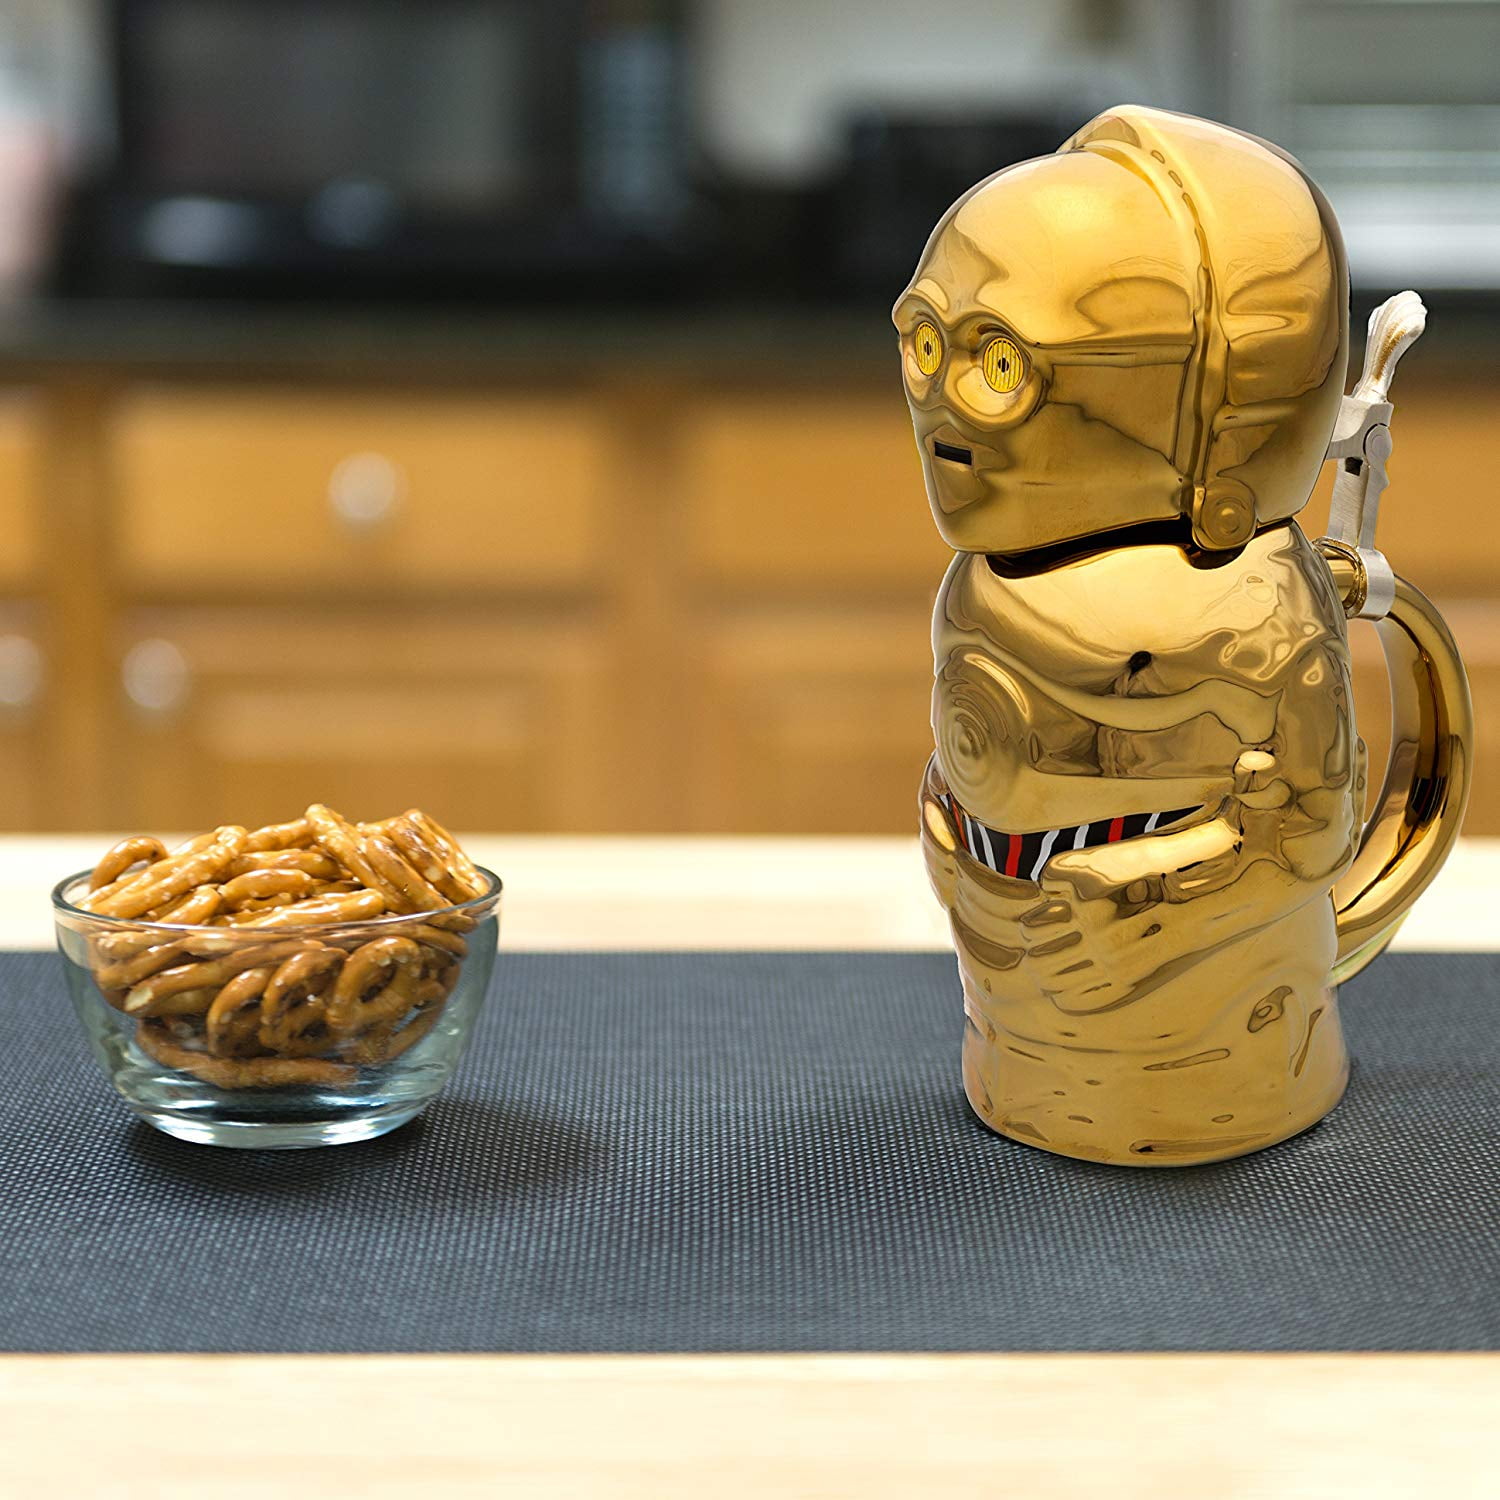 Star Wars Stormtrooper Mug Stein Large 5 Imperial Bandai Ceramic